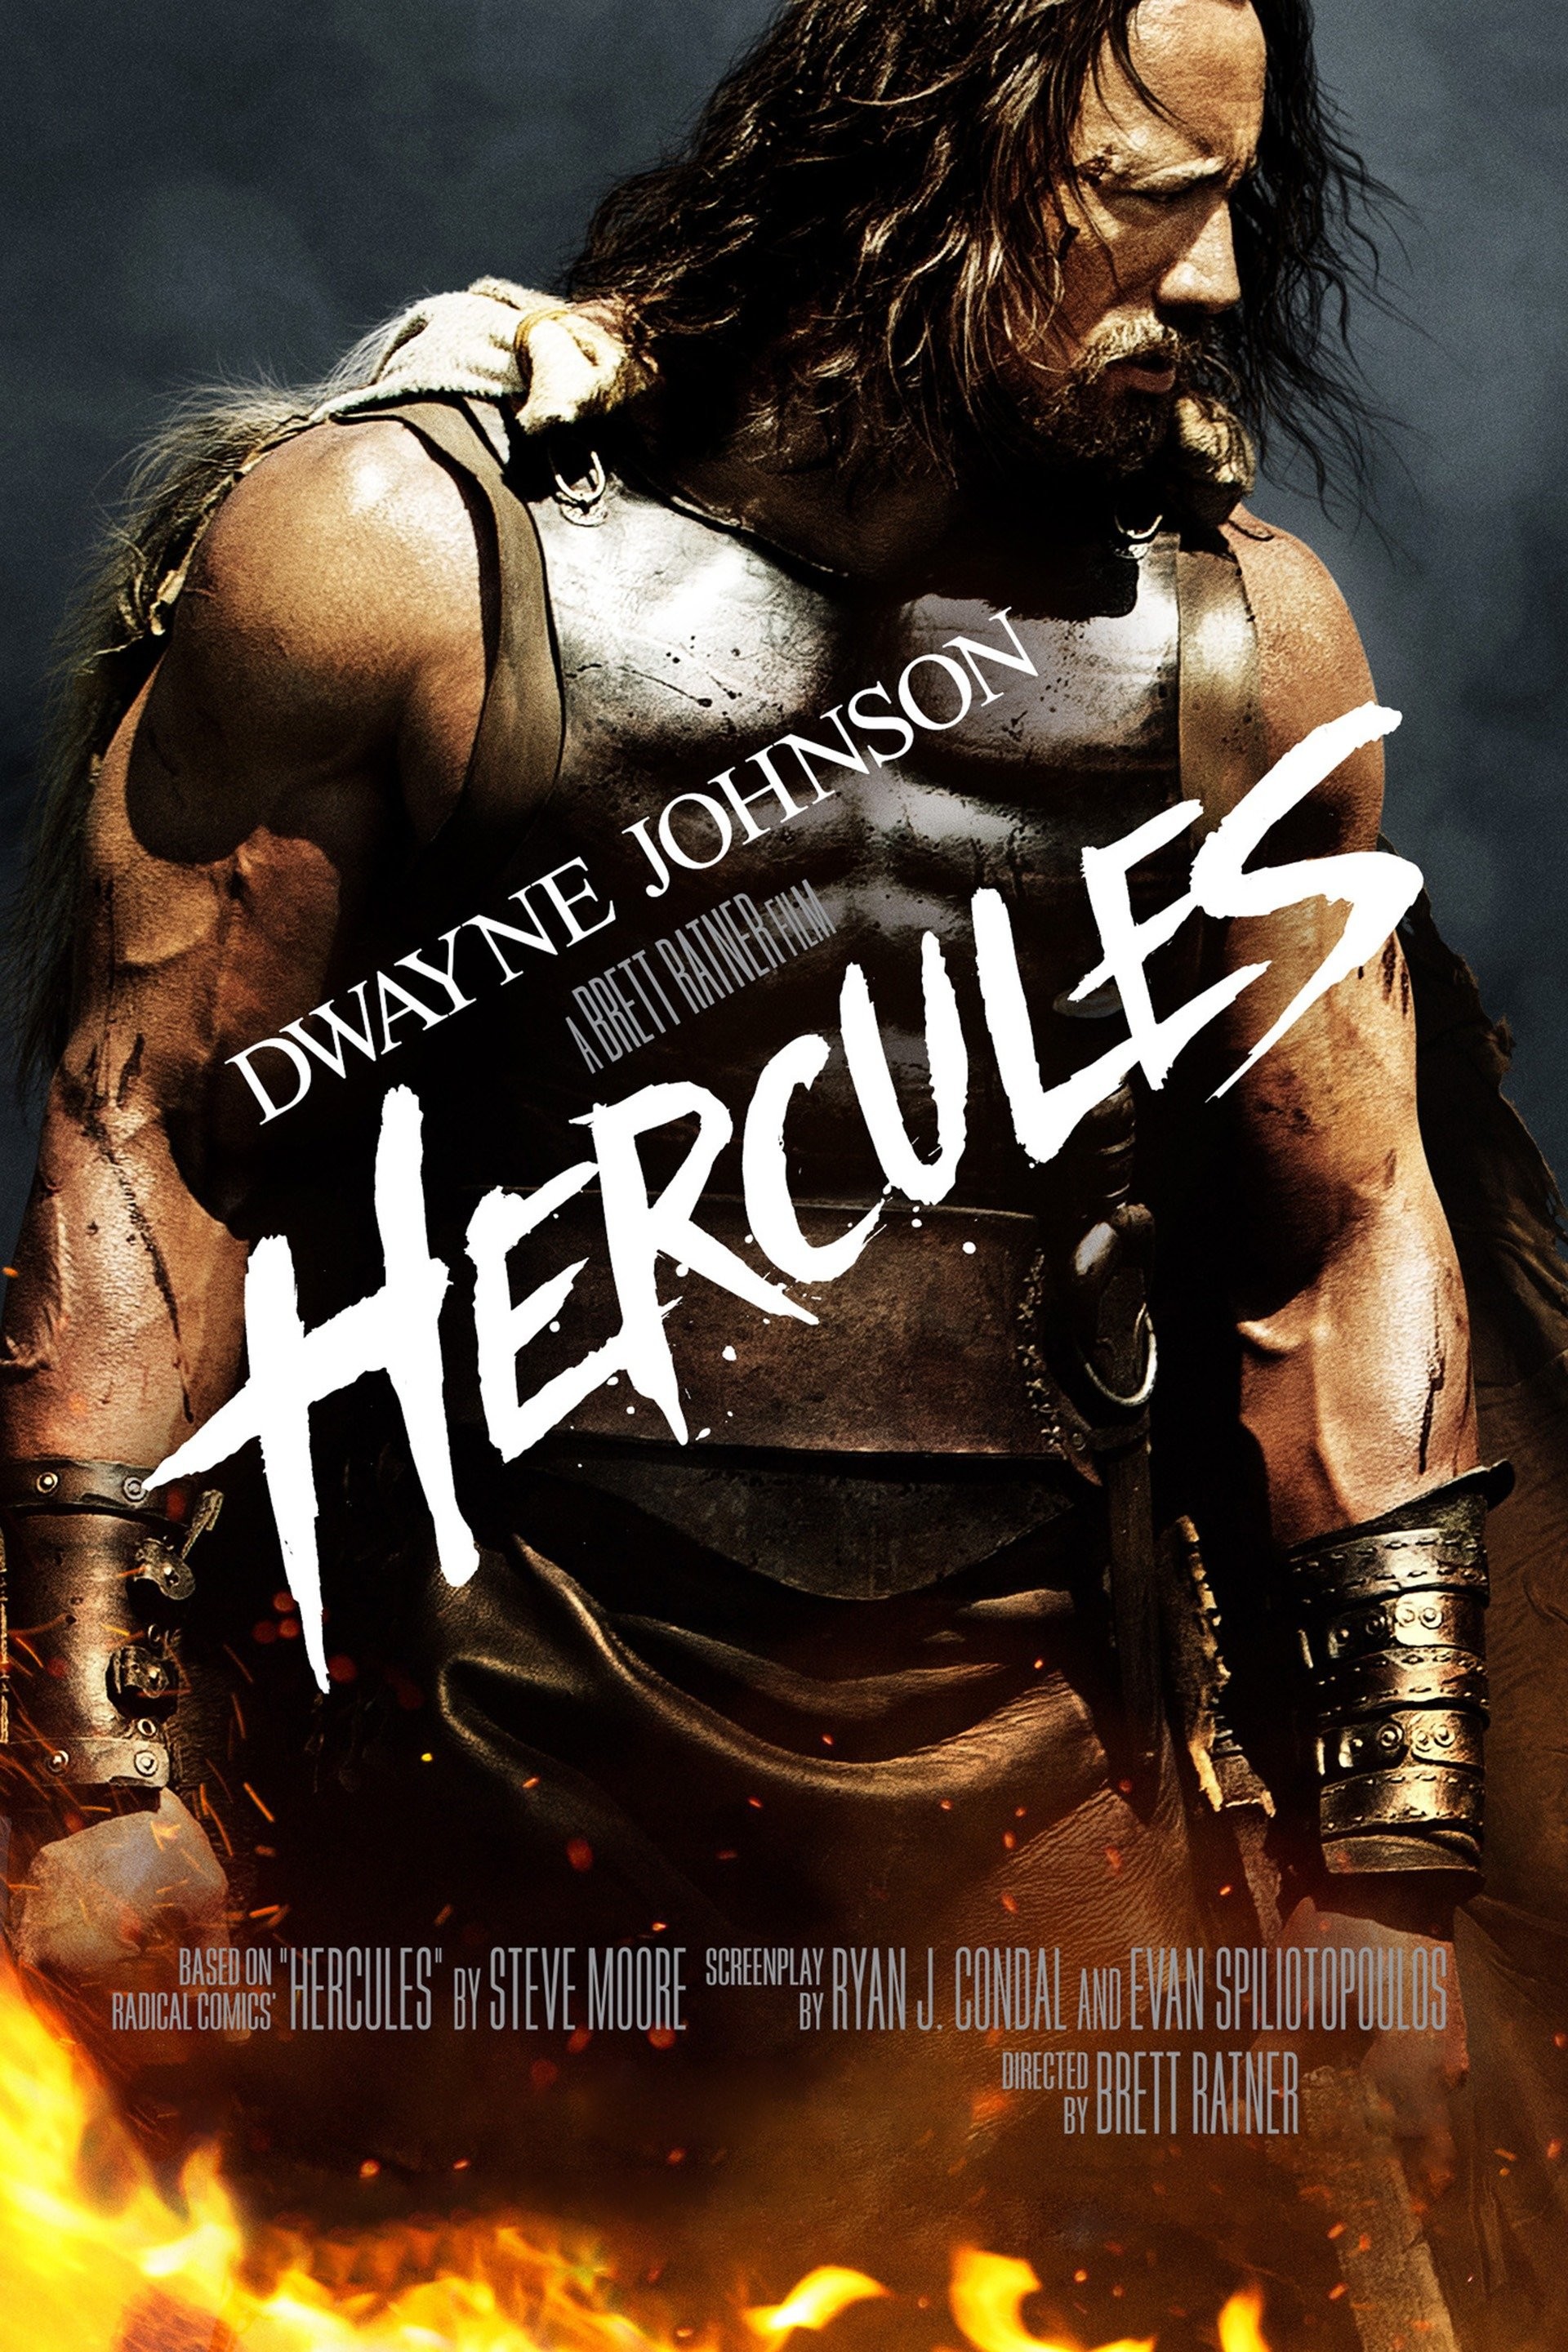 Hercules  Rotten Tomatoes